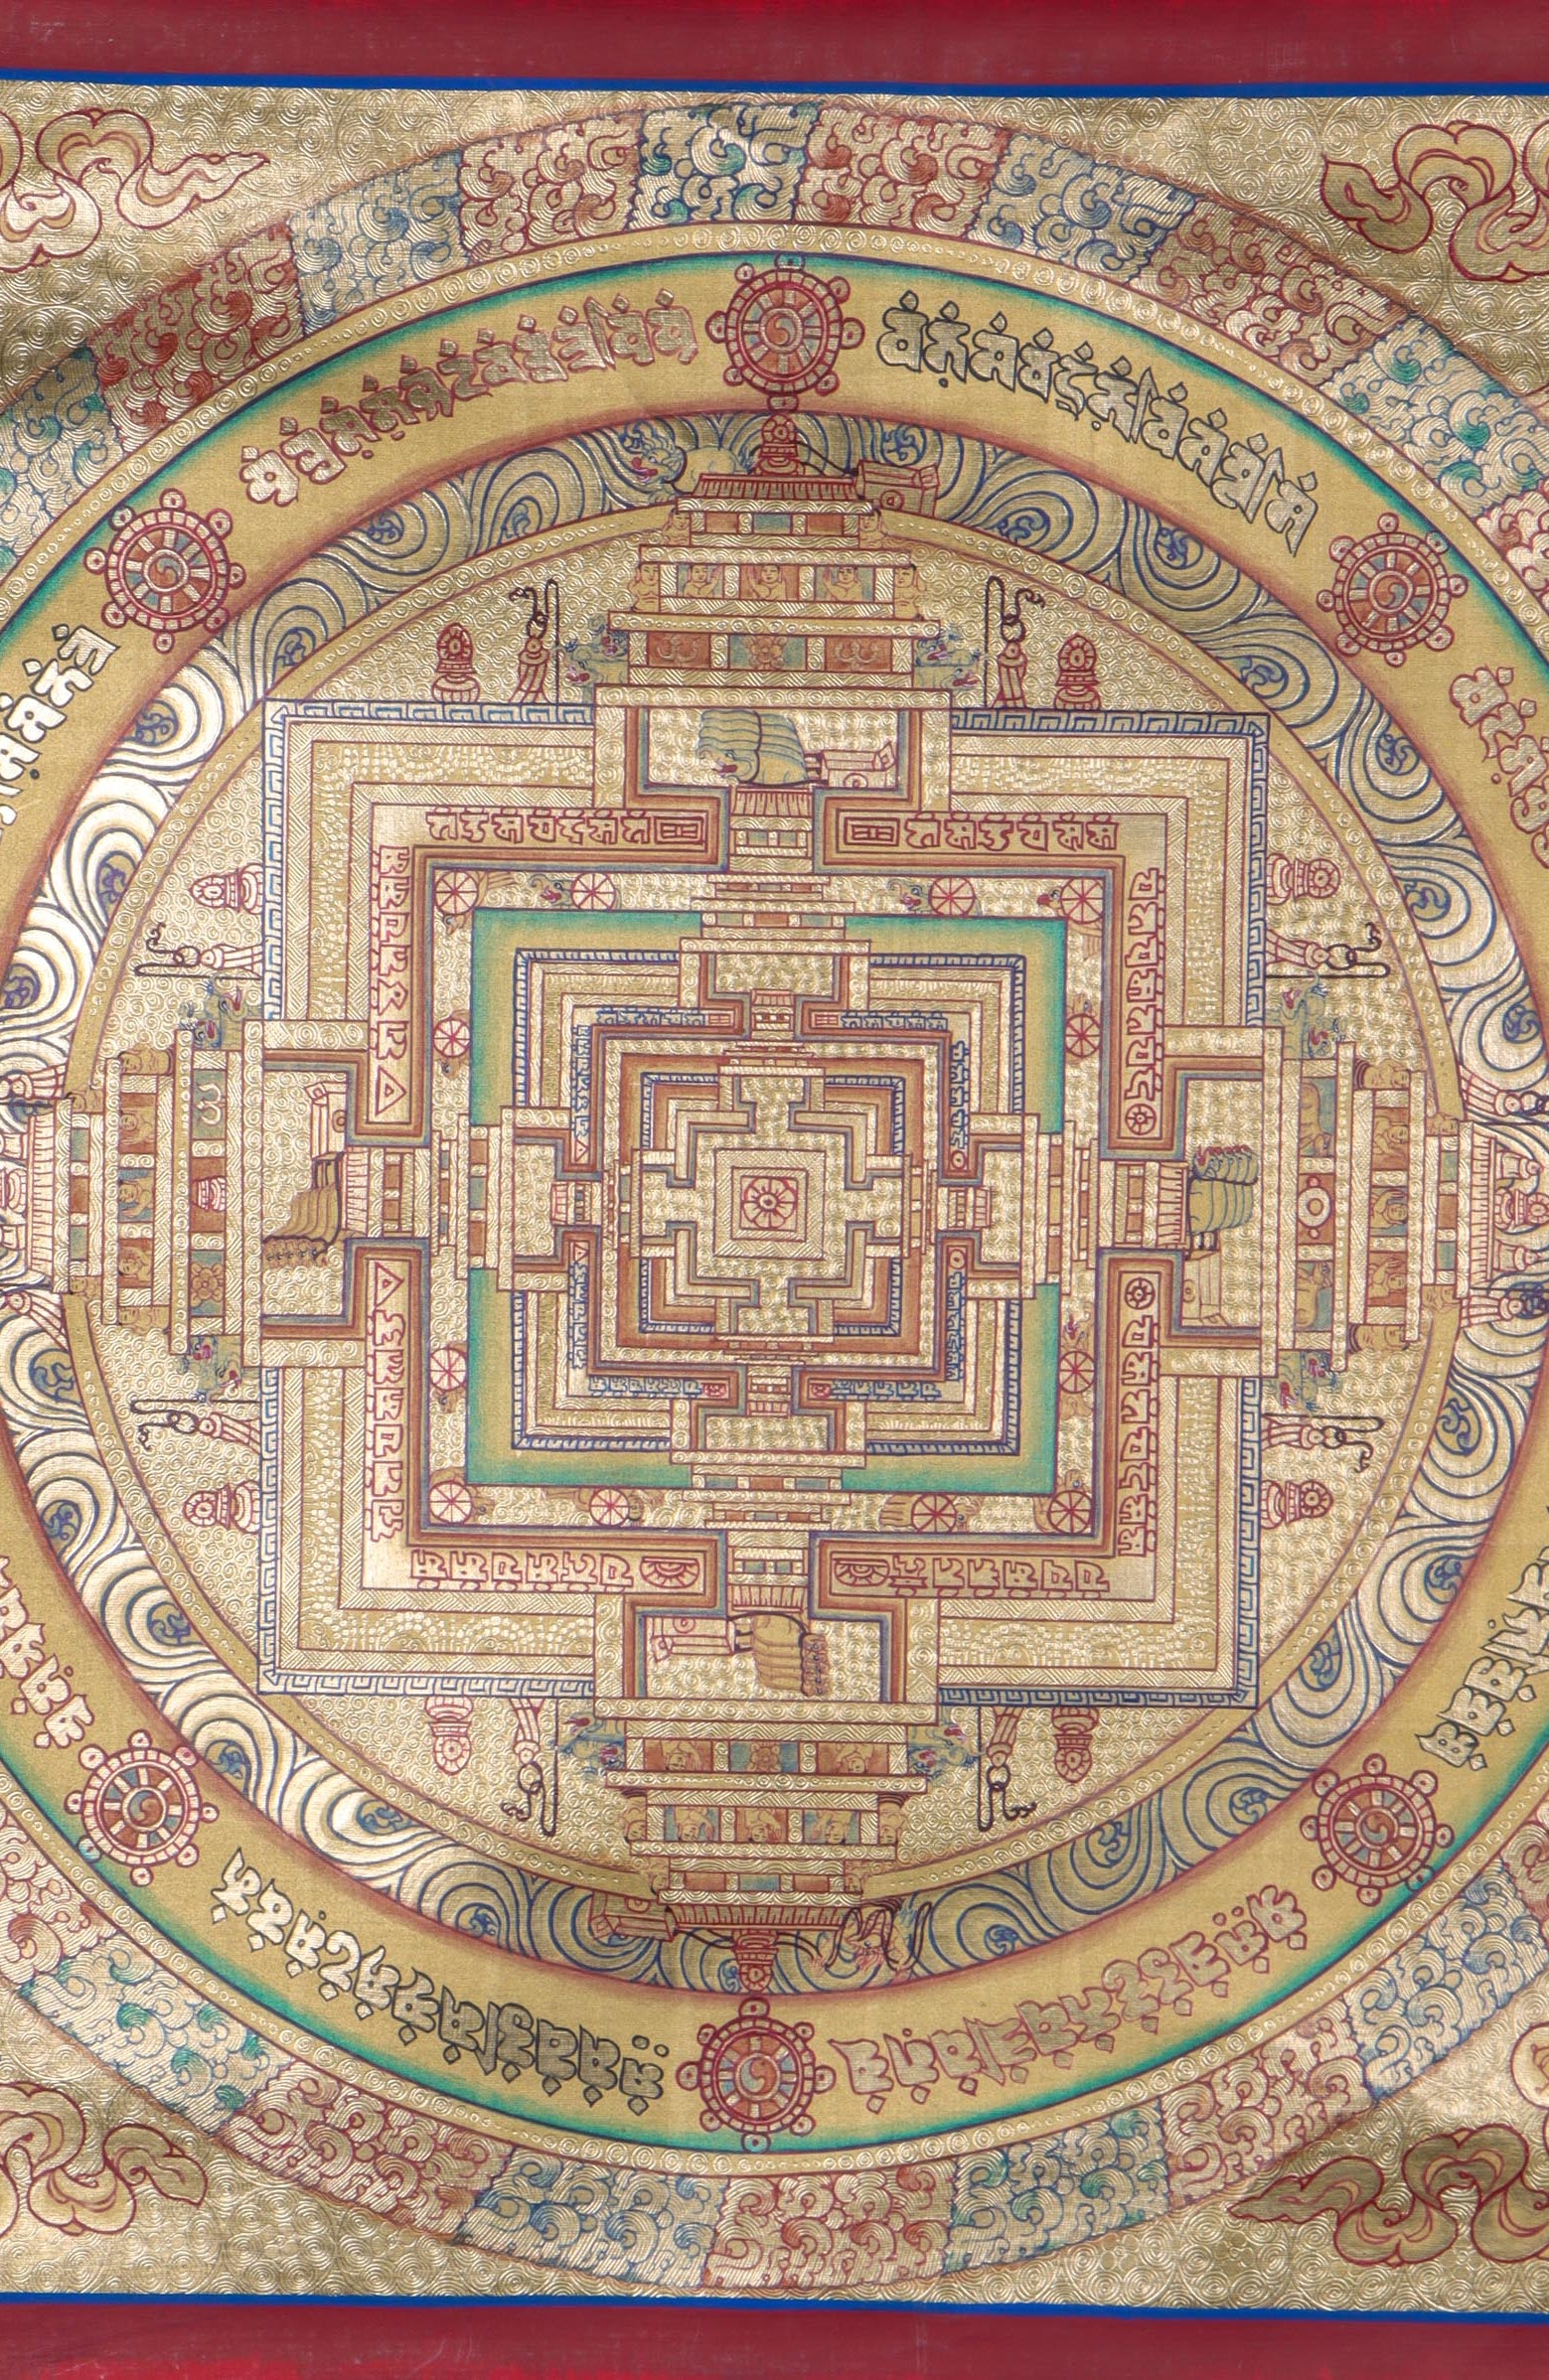 Gold Kalachakra Mantra Mandala made by the skilled artisans .